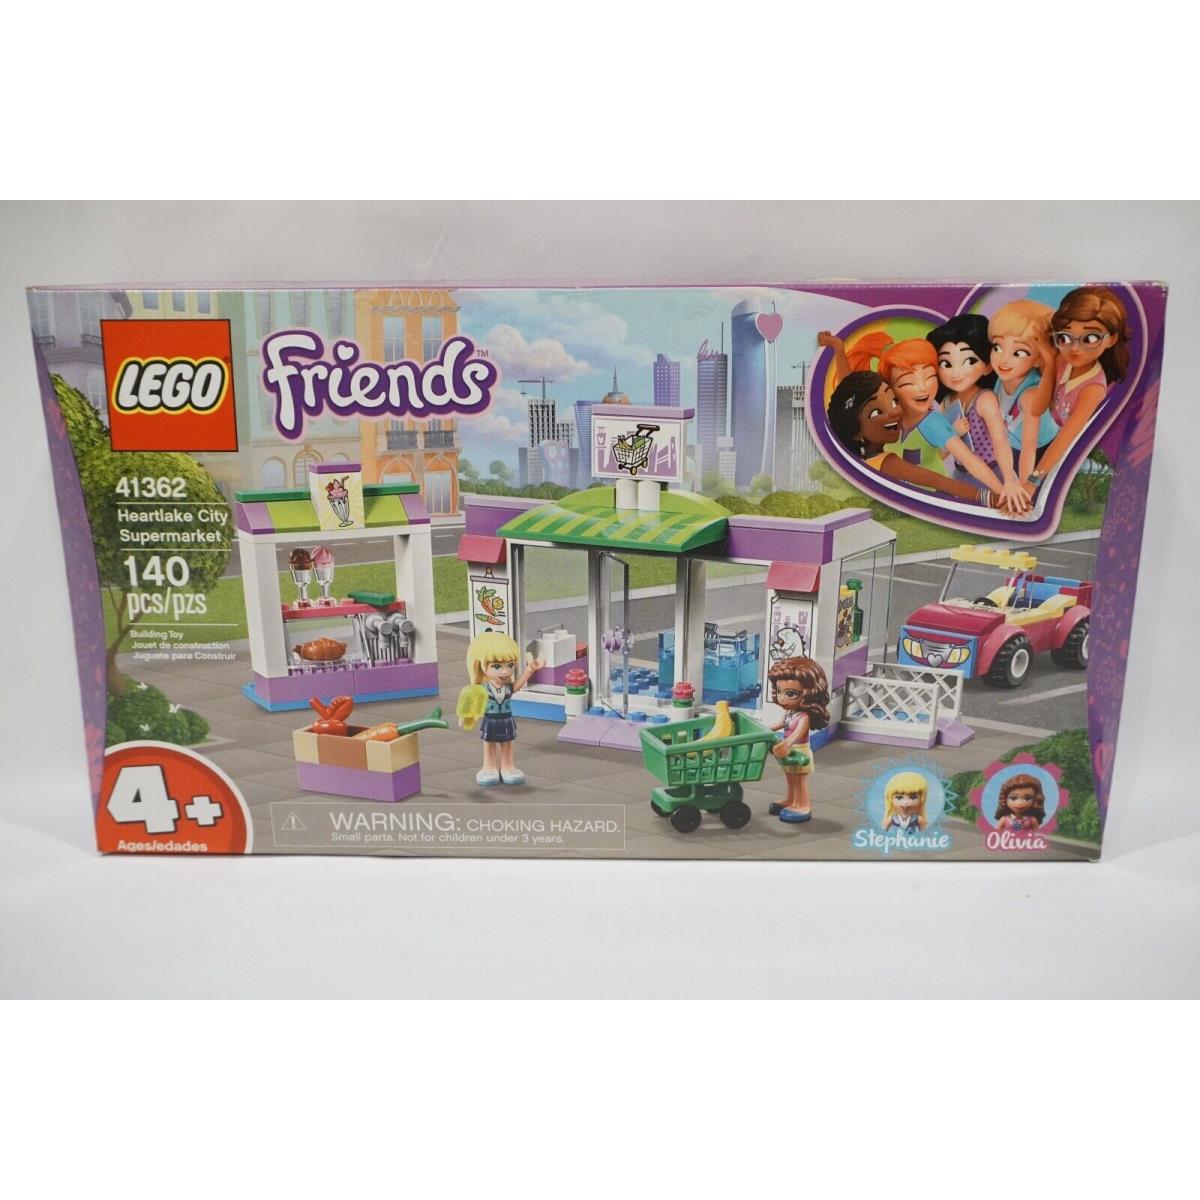 Lego Friends: Heartlake City Supermarket 41362 Retired Set